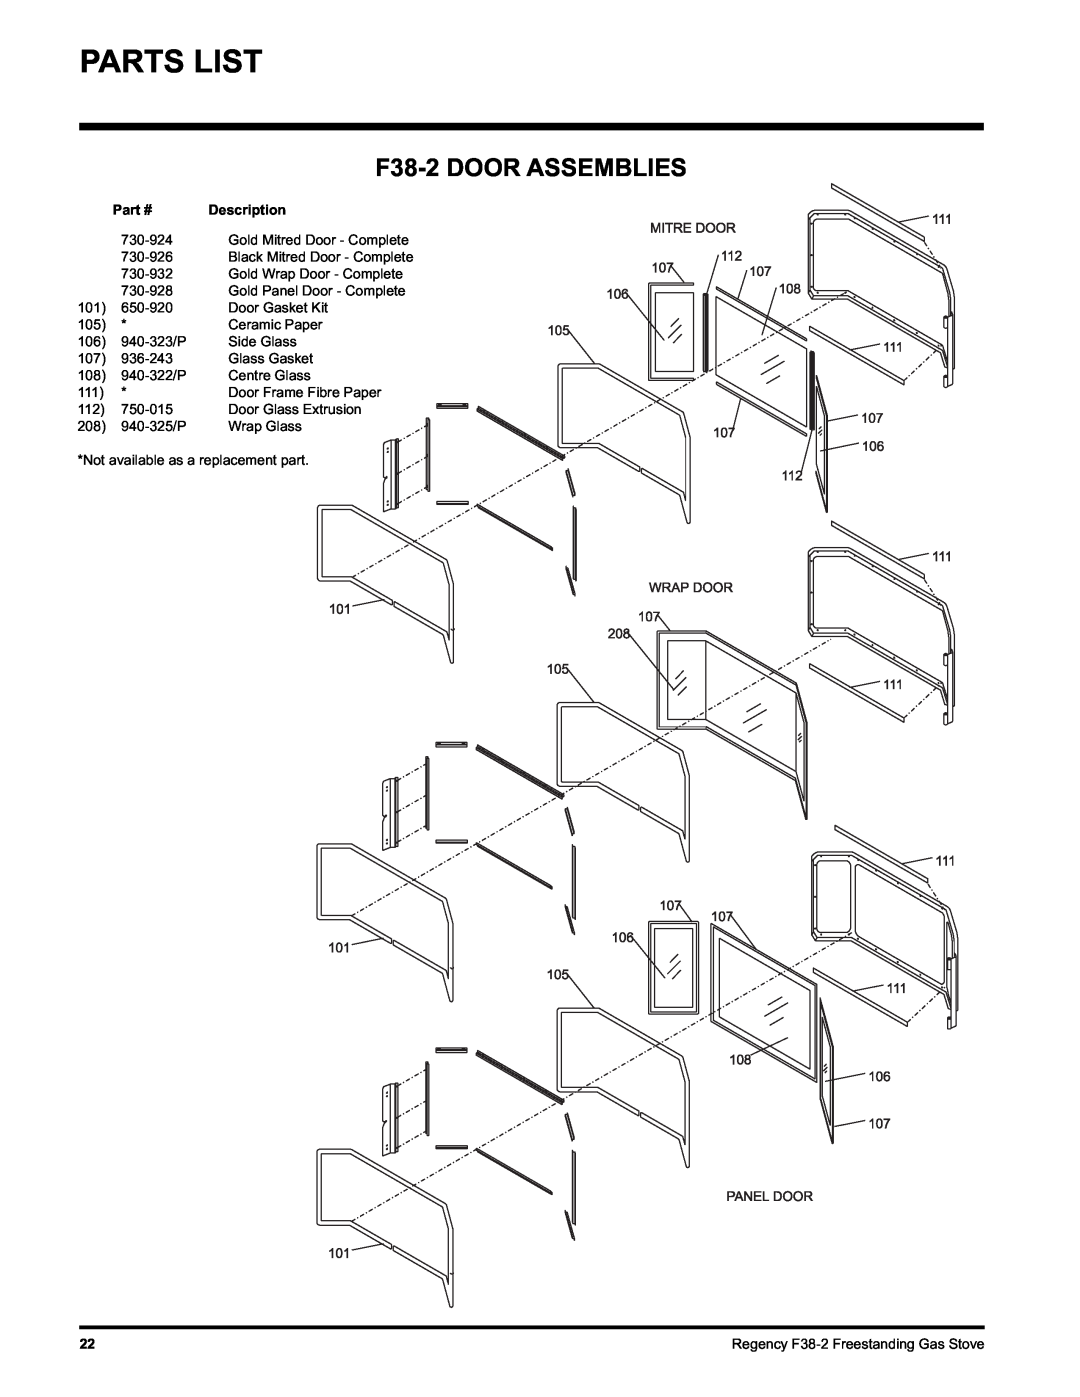 Regency Wraps F38-LPG2, F38-NG2 installation manual F38-2DOOR ASSEMBLIES, Parts List, Description 